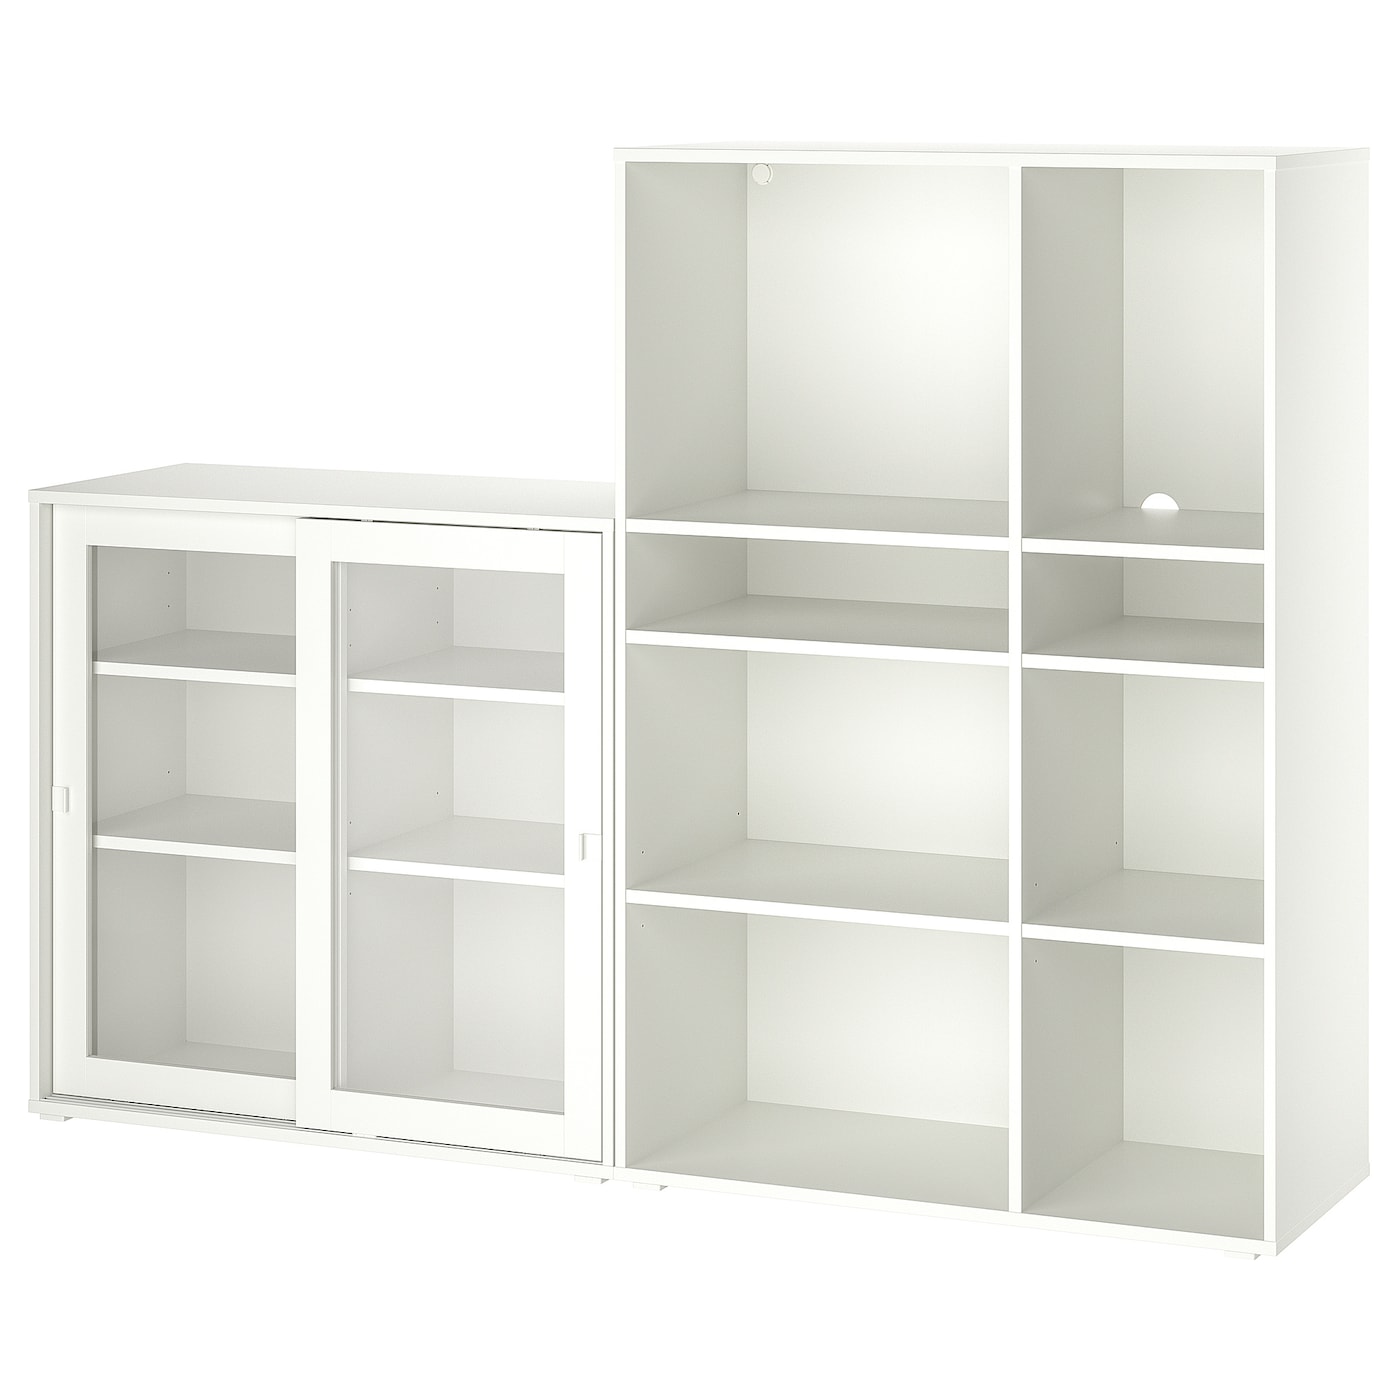 Книжный шкаф - VIHALS IKEA/ ВИХАЛС ИКЕА,   190х140 см, белый